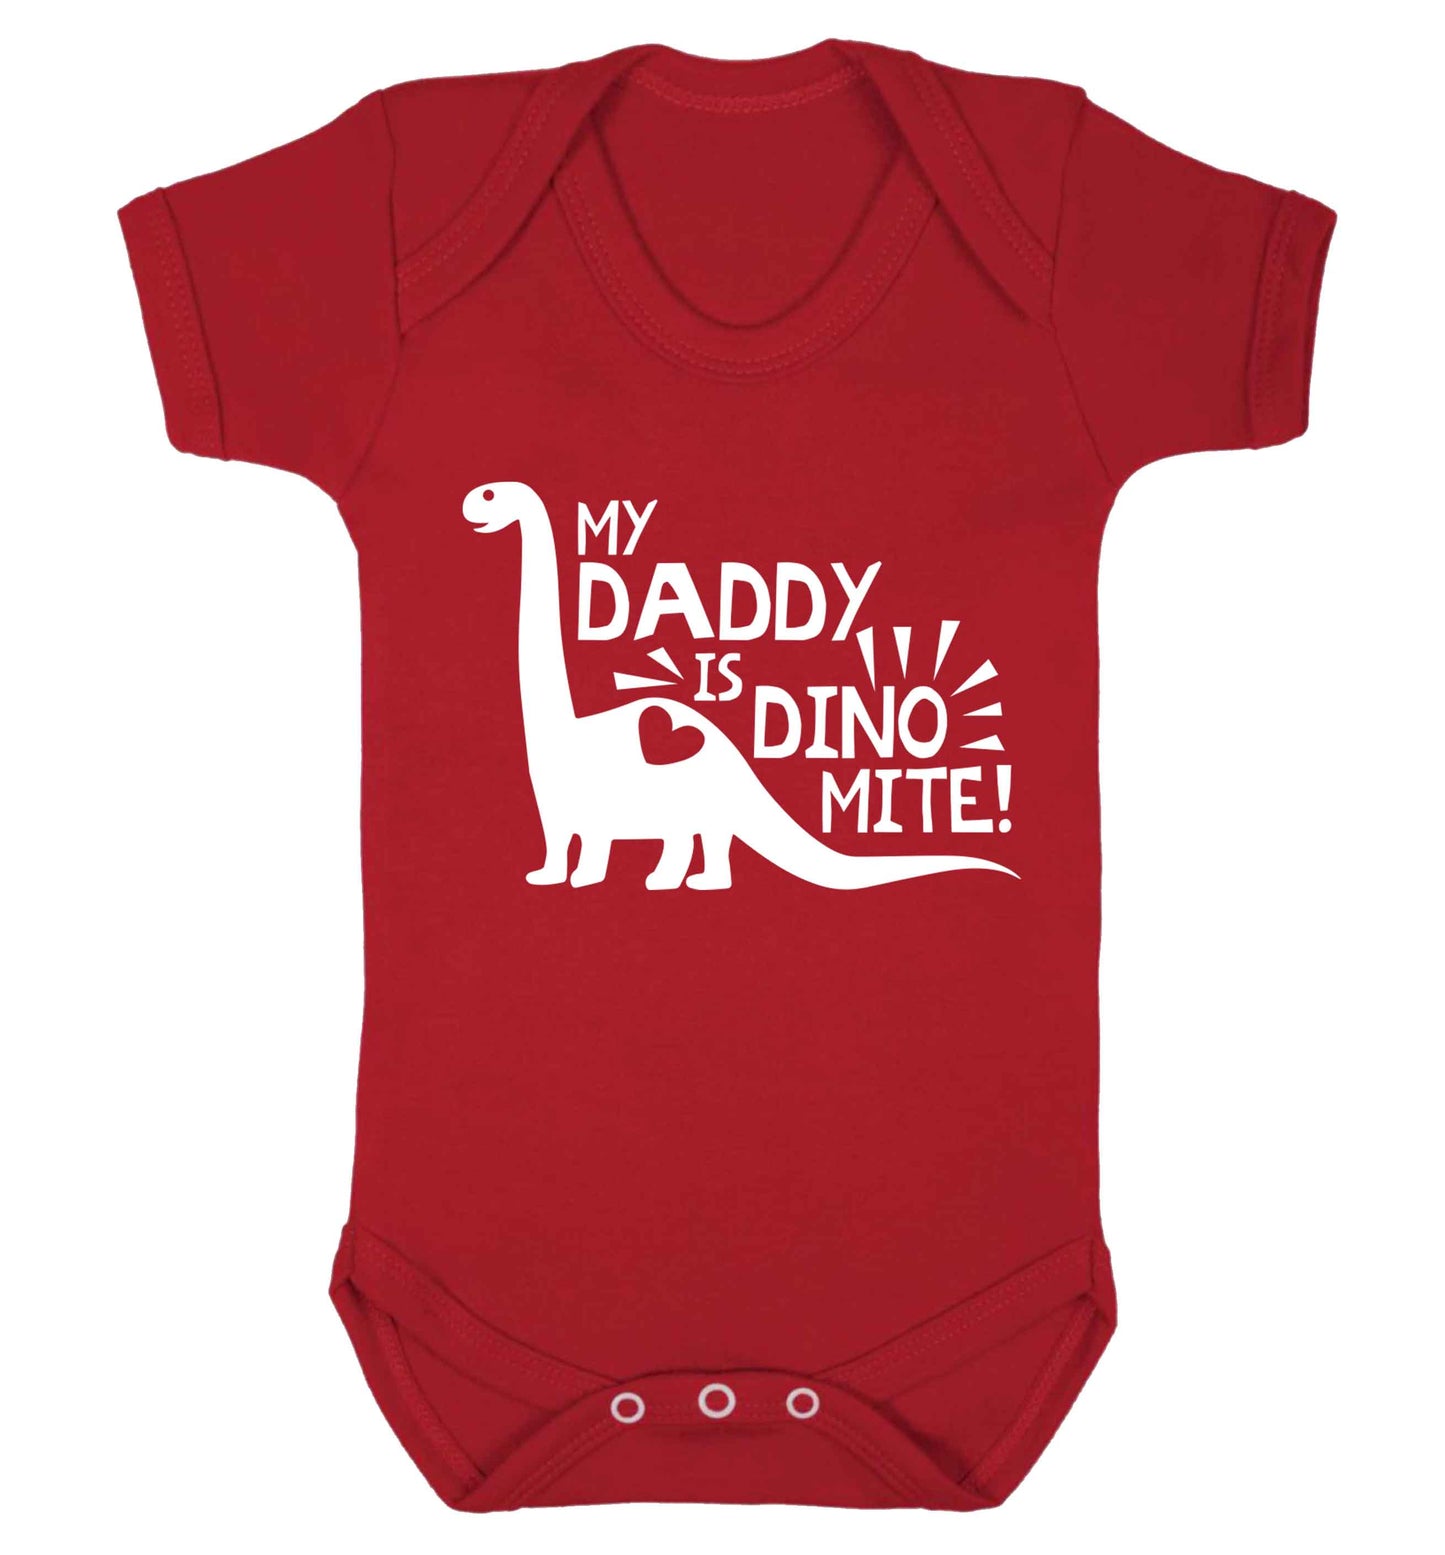 My daddy is dinomite! Baby Vest red 18-24 months